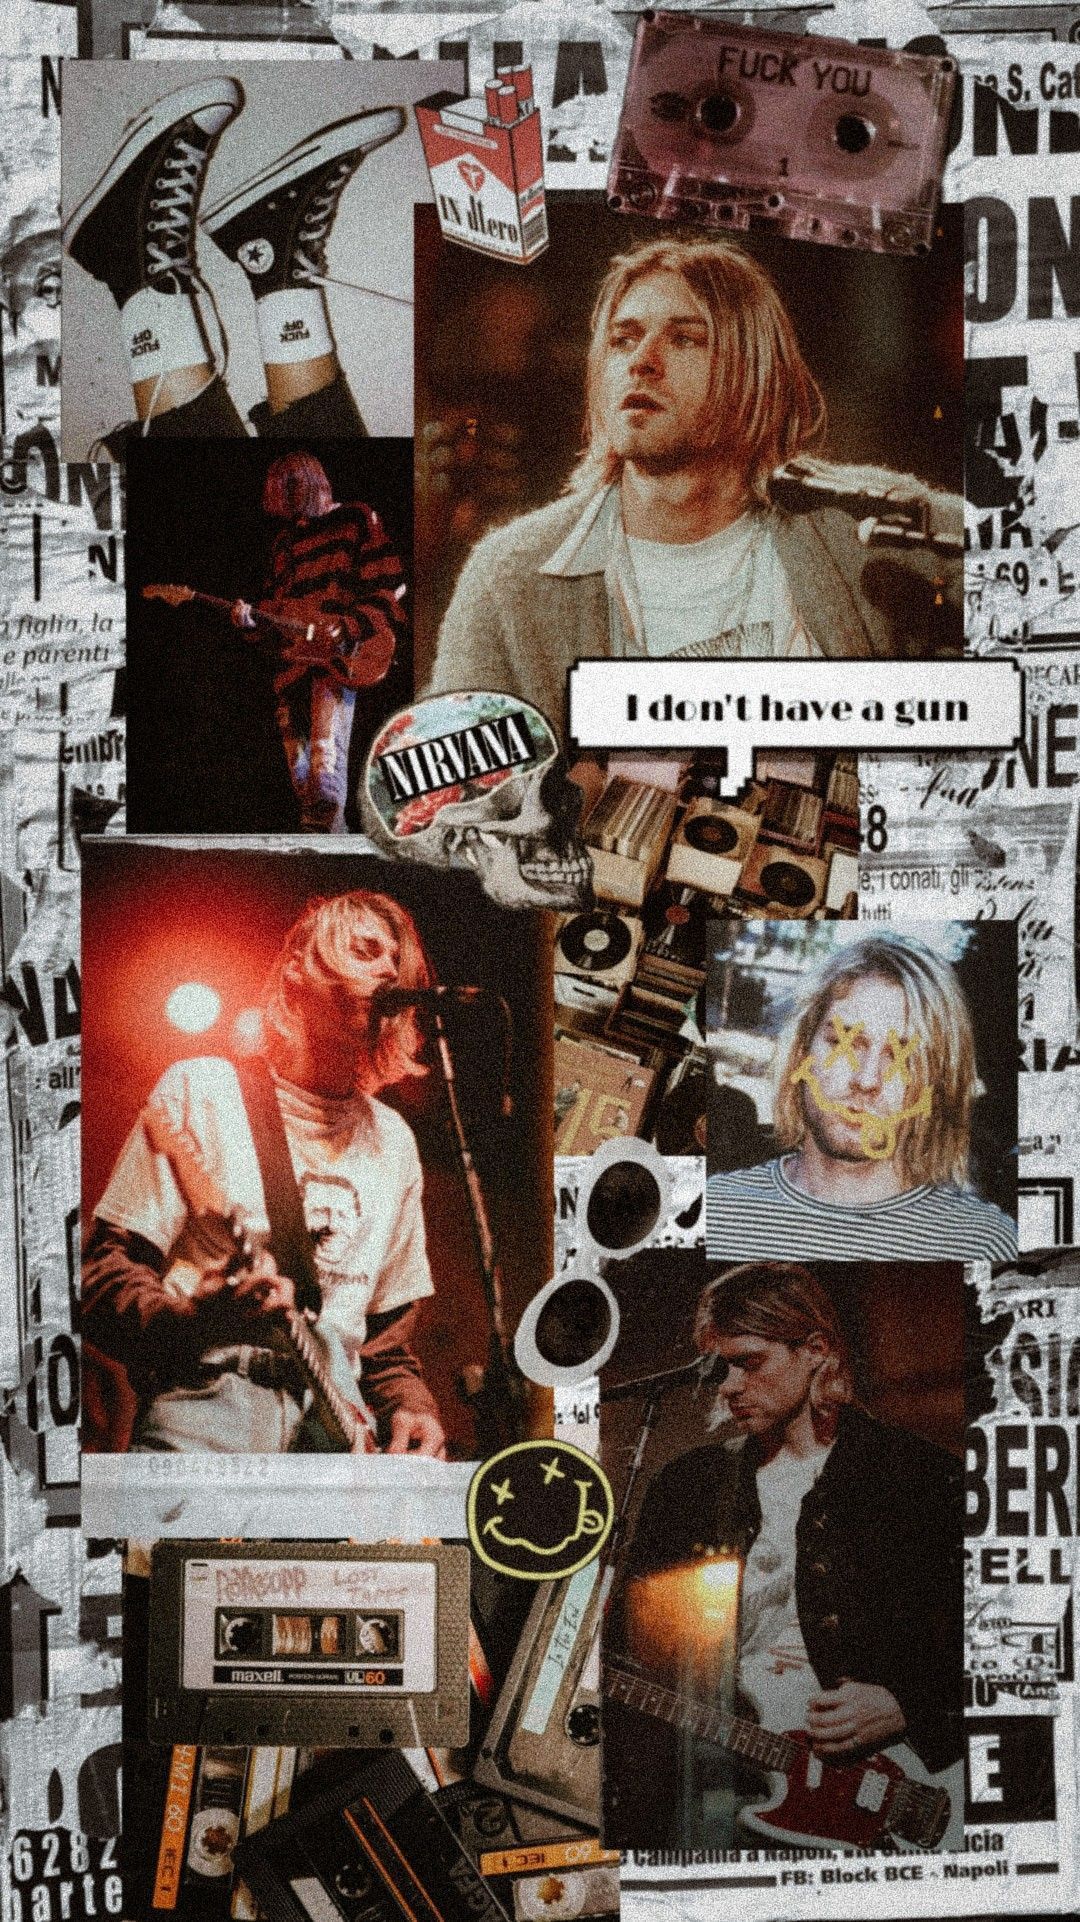 Kurt Cobain wallpaper aesthetic. Nirvana wallpaper, Nirvana poster, Nirvana